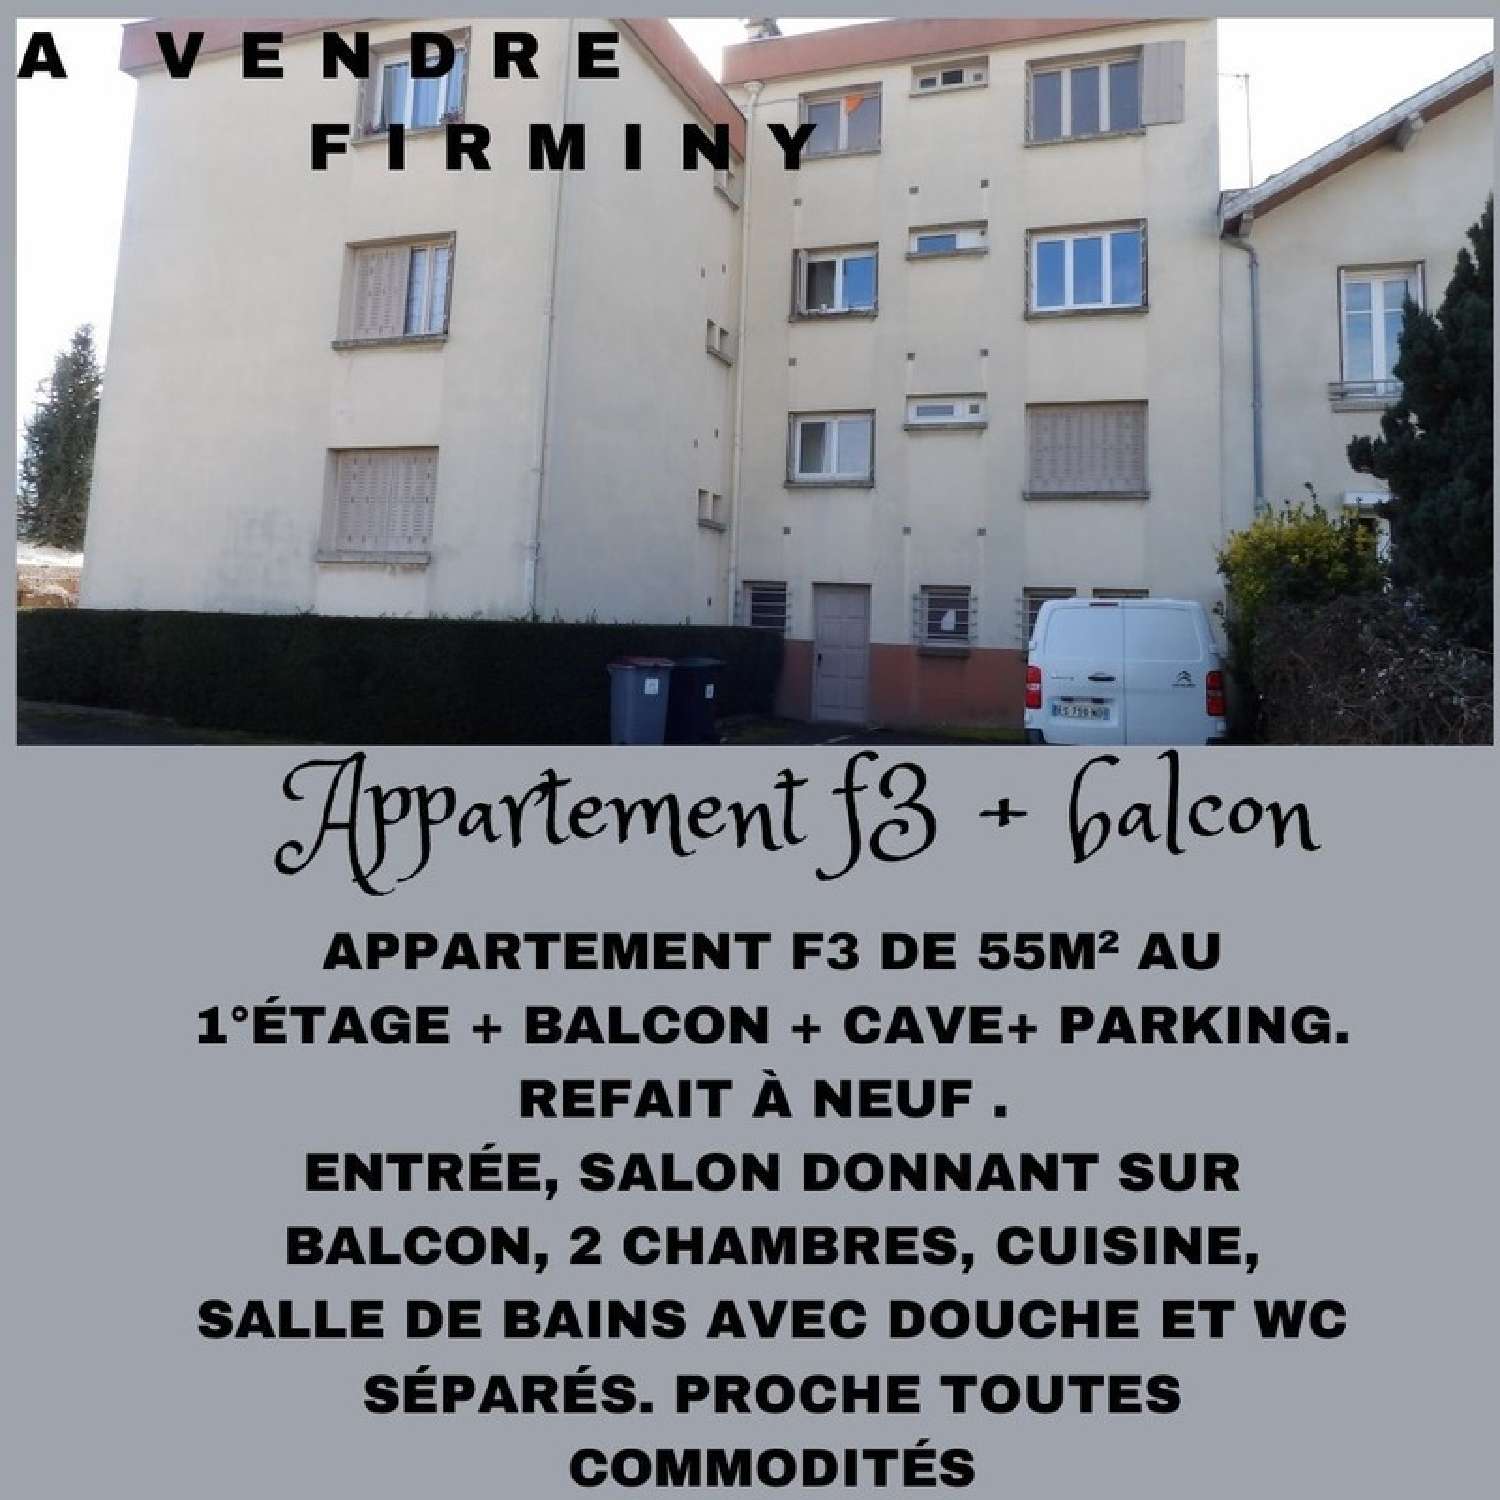  for sale apartment Firminy Loire 1